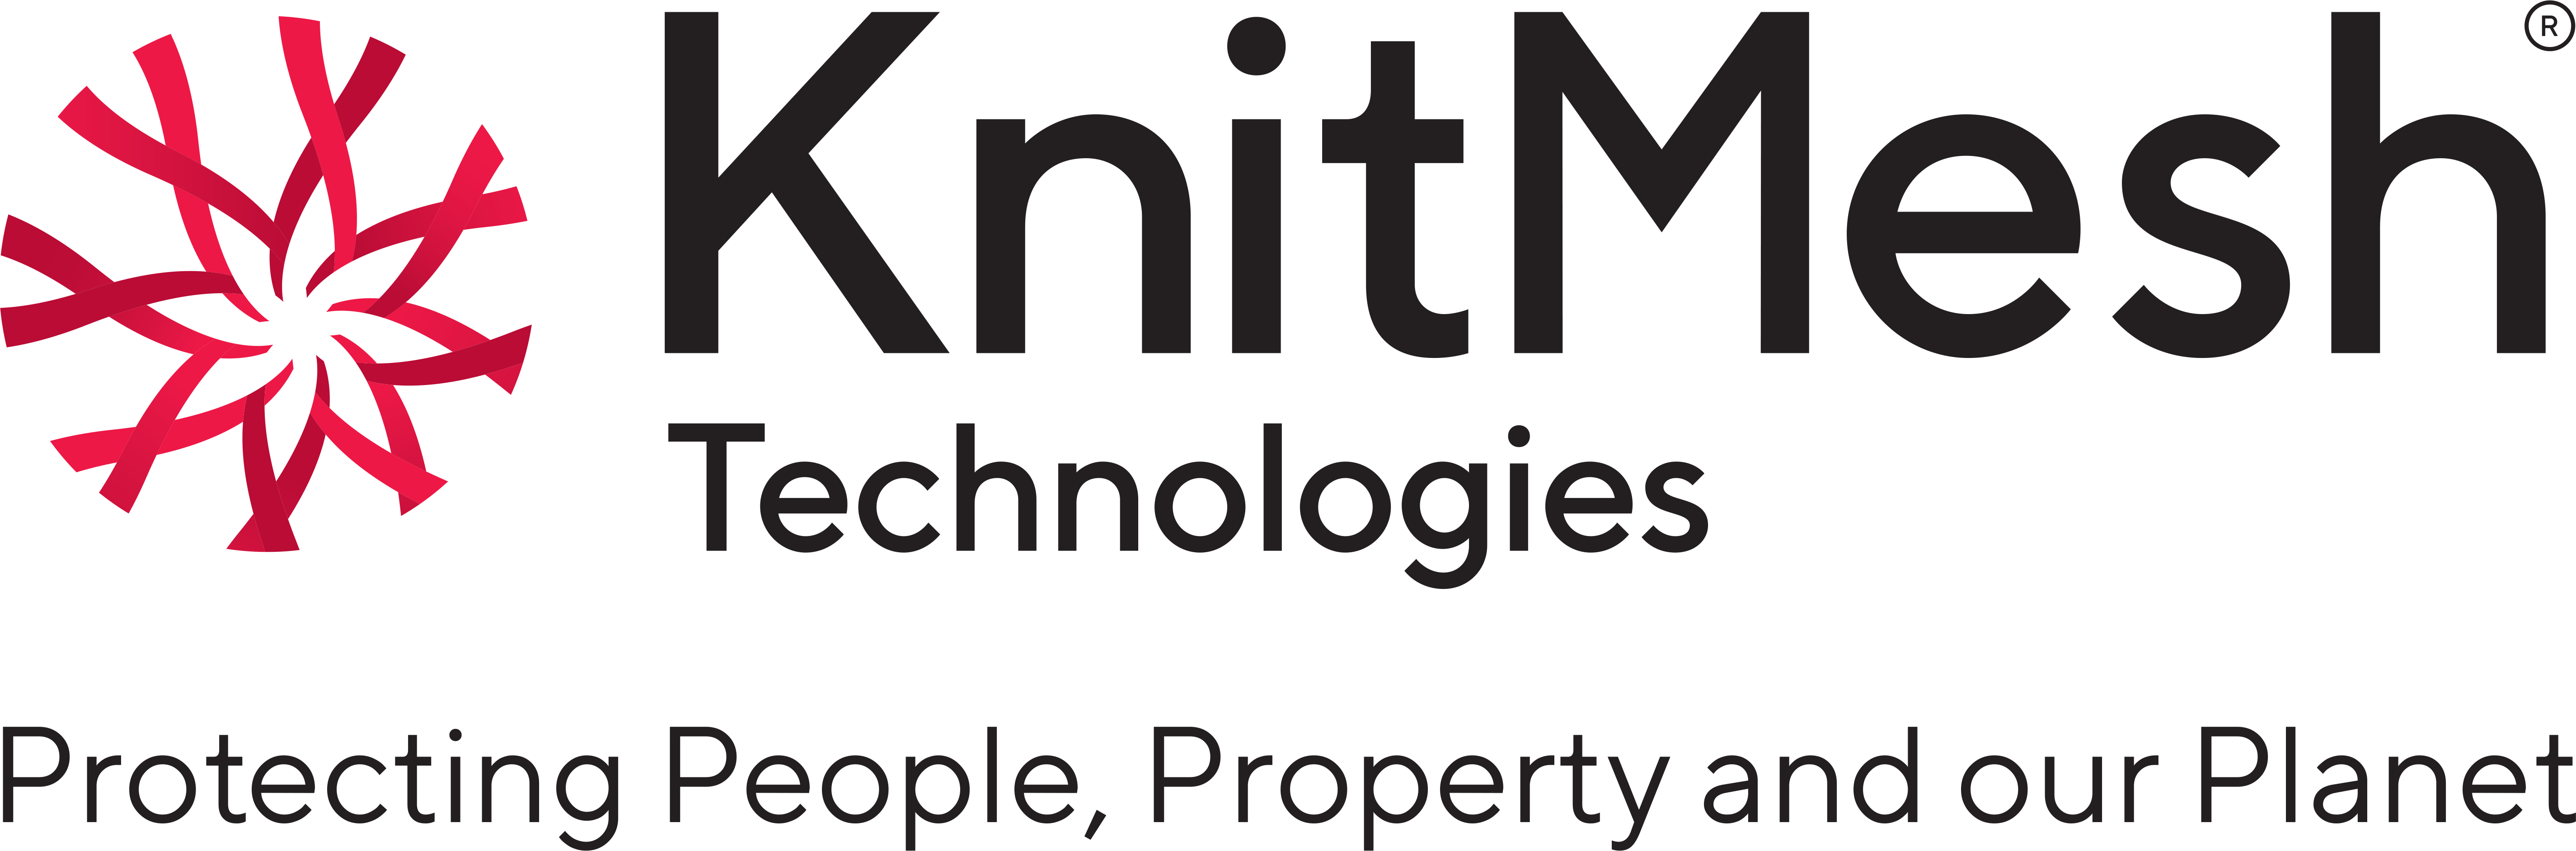 KnitMesh Technologies